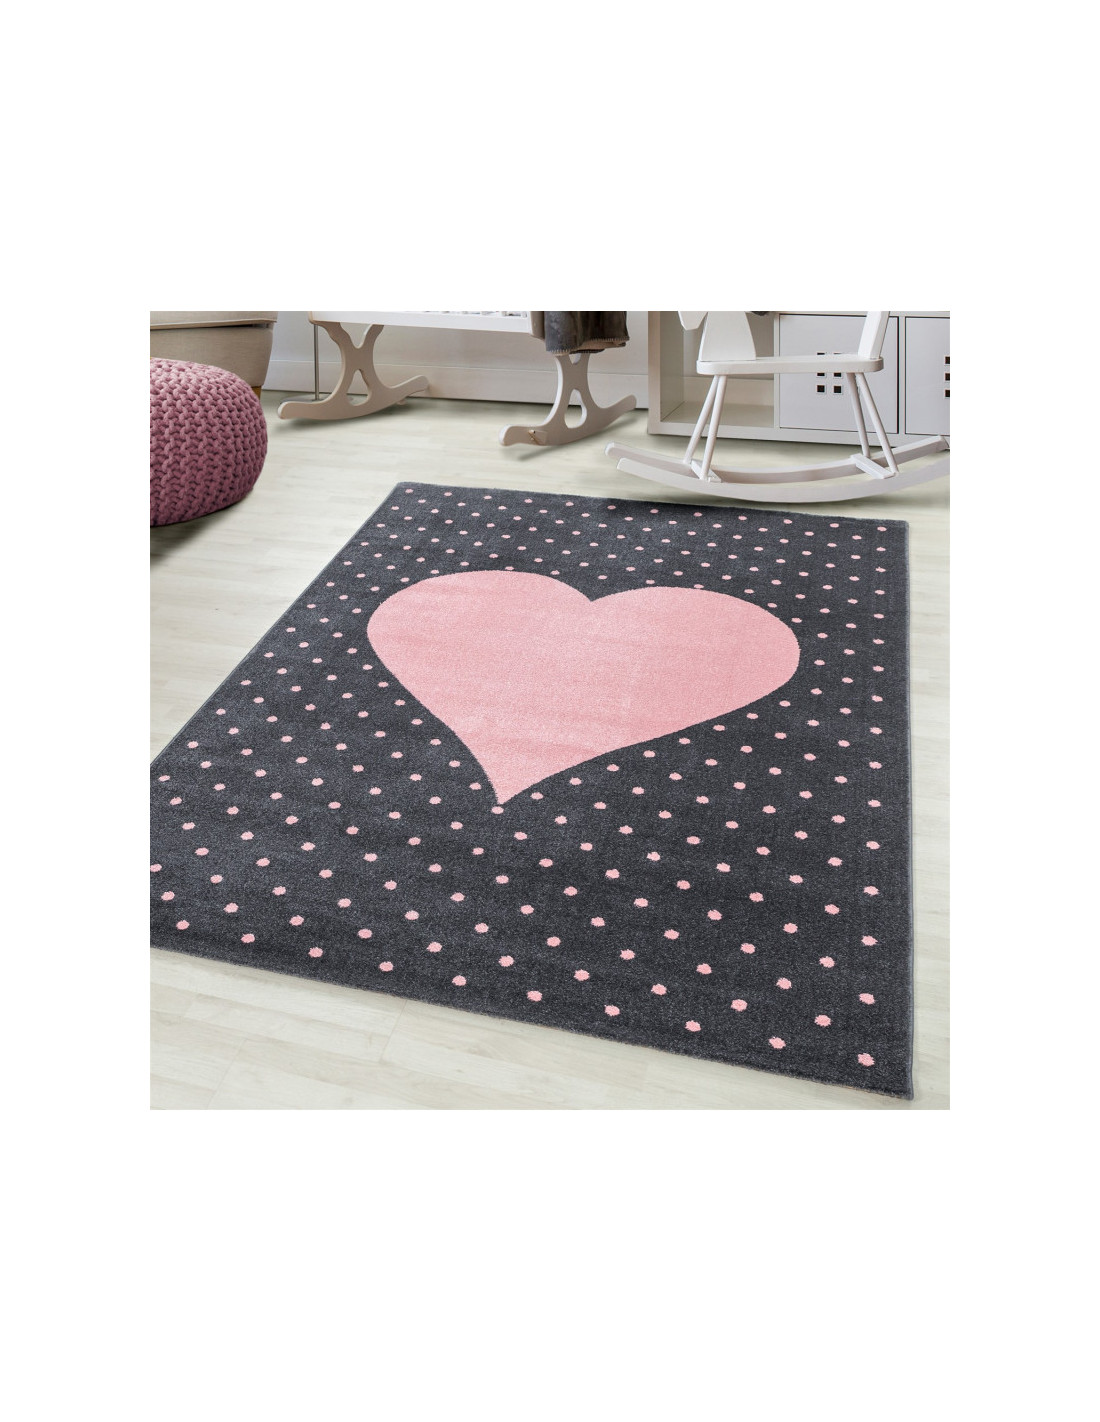 Children's carpet Children's room carpet 3D heart motif pink gray